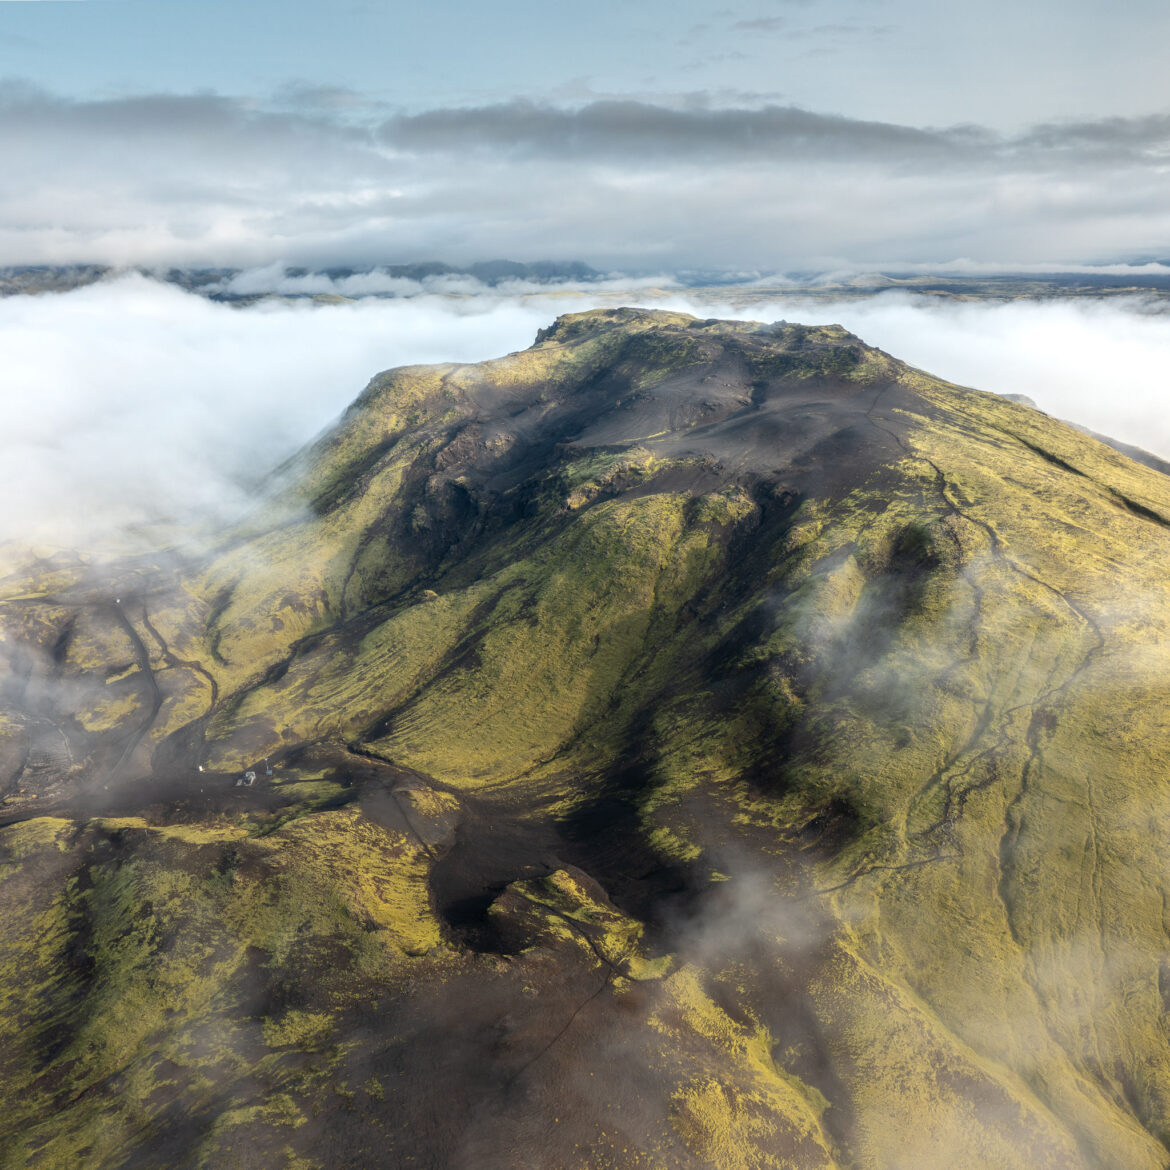 Laki im Nebel (Mit Genehmigung des Vatnajökull National Park)